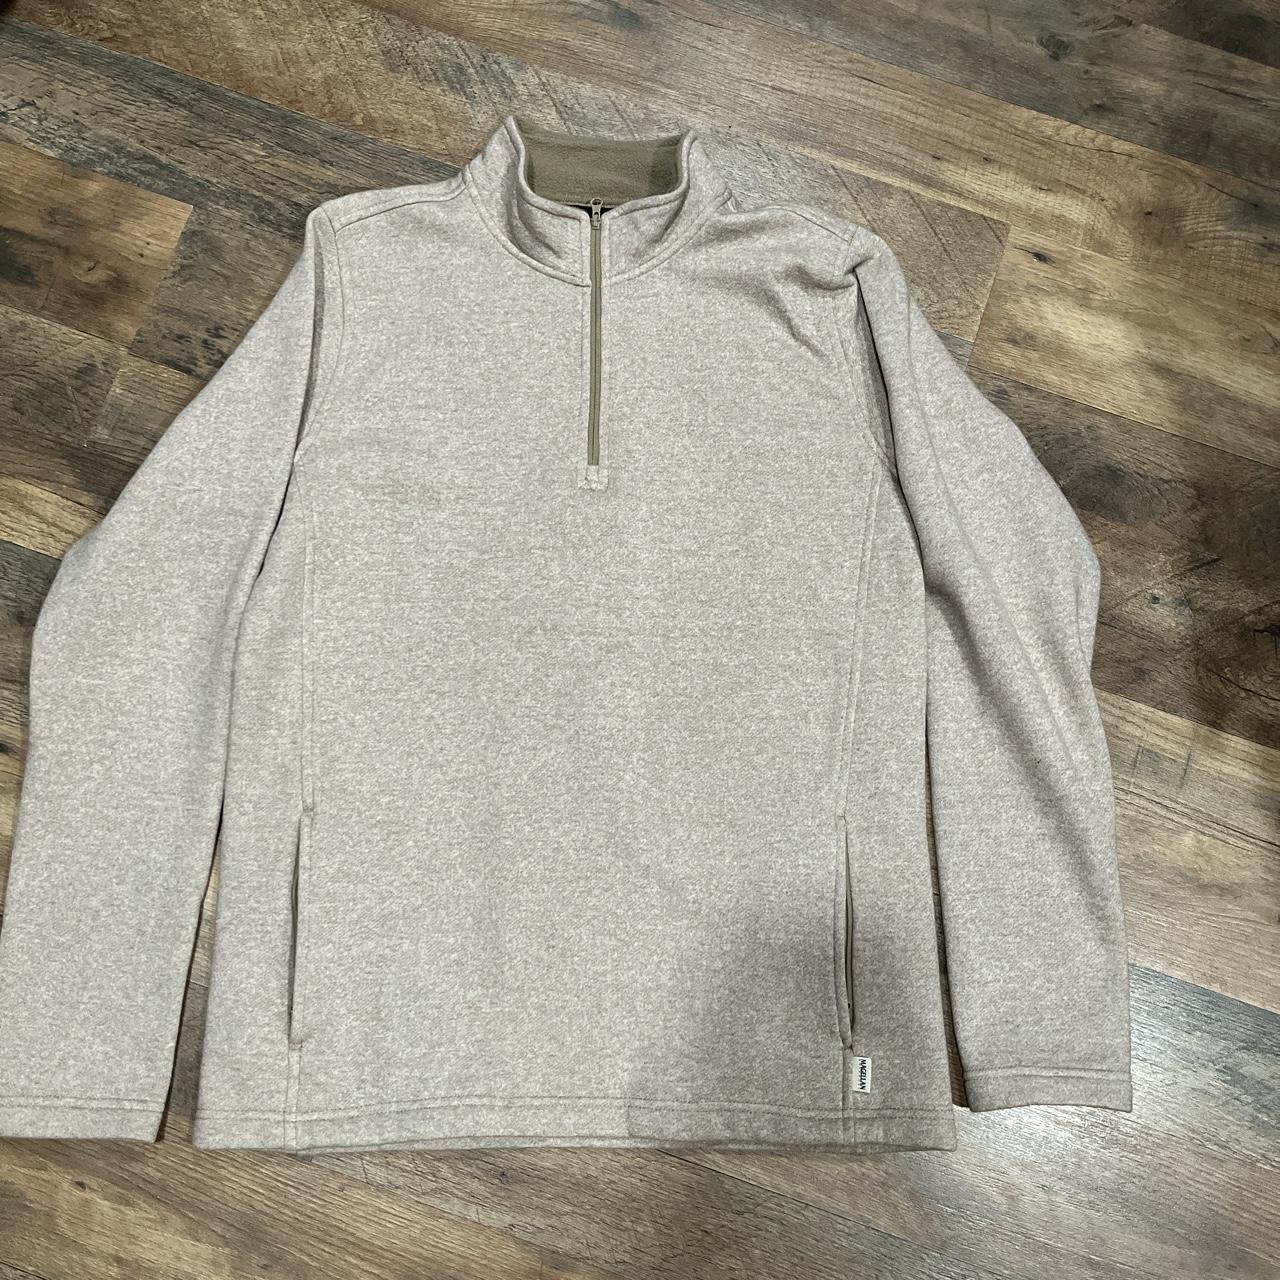 zip up sweater Magellan Size xl in kids - Depop